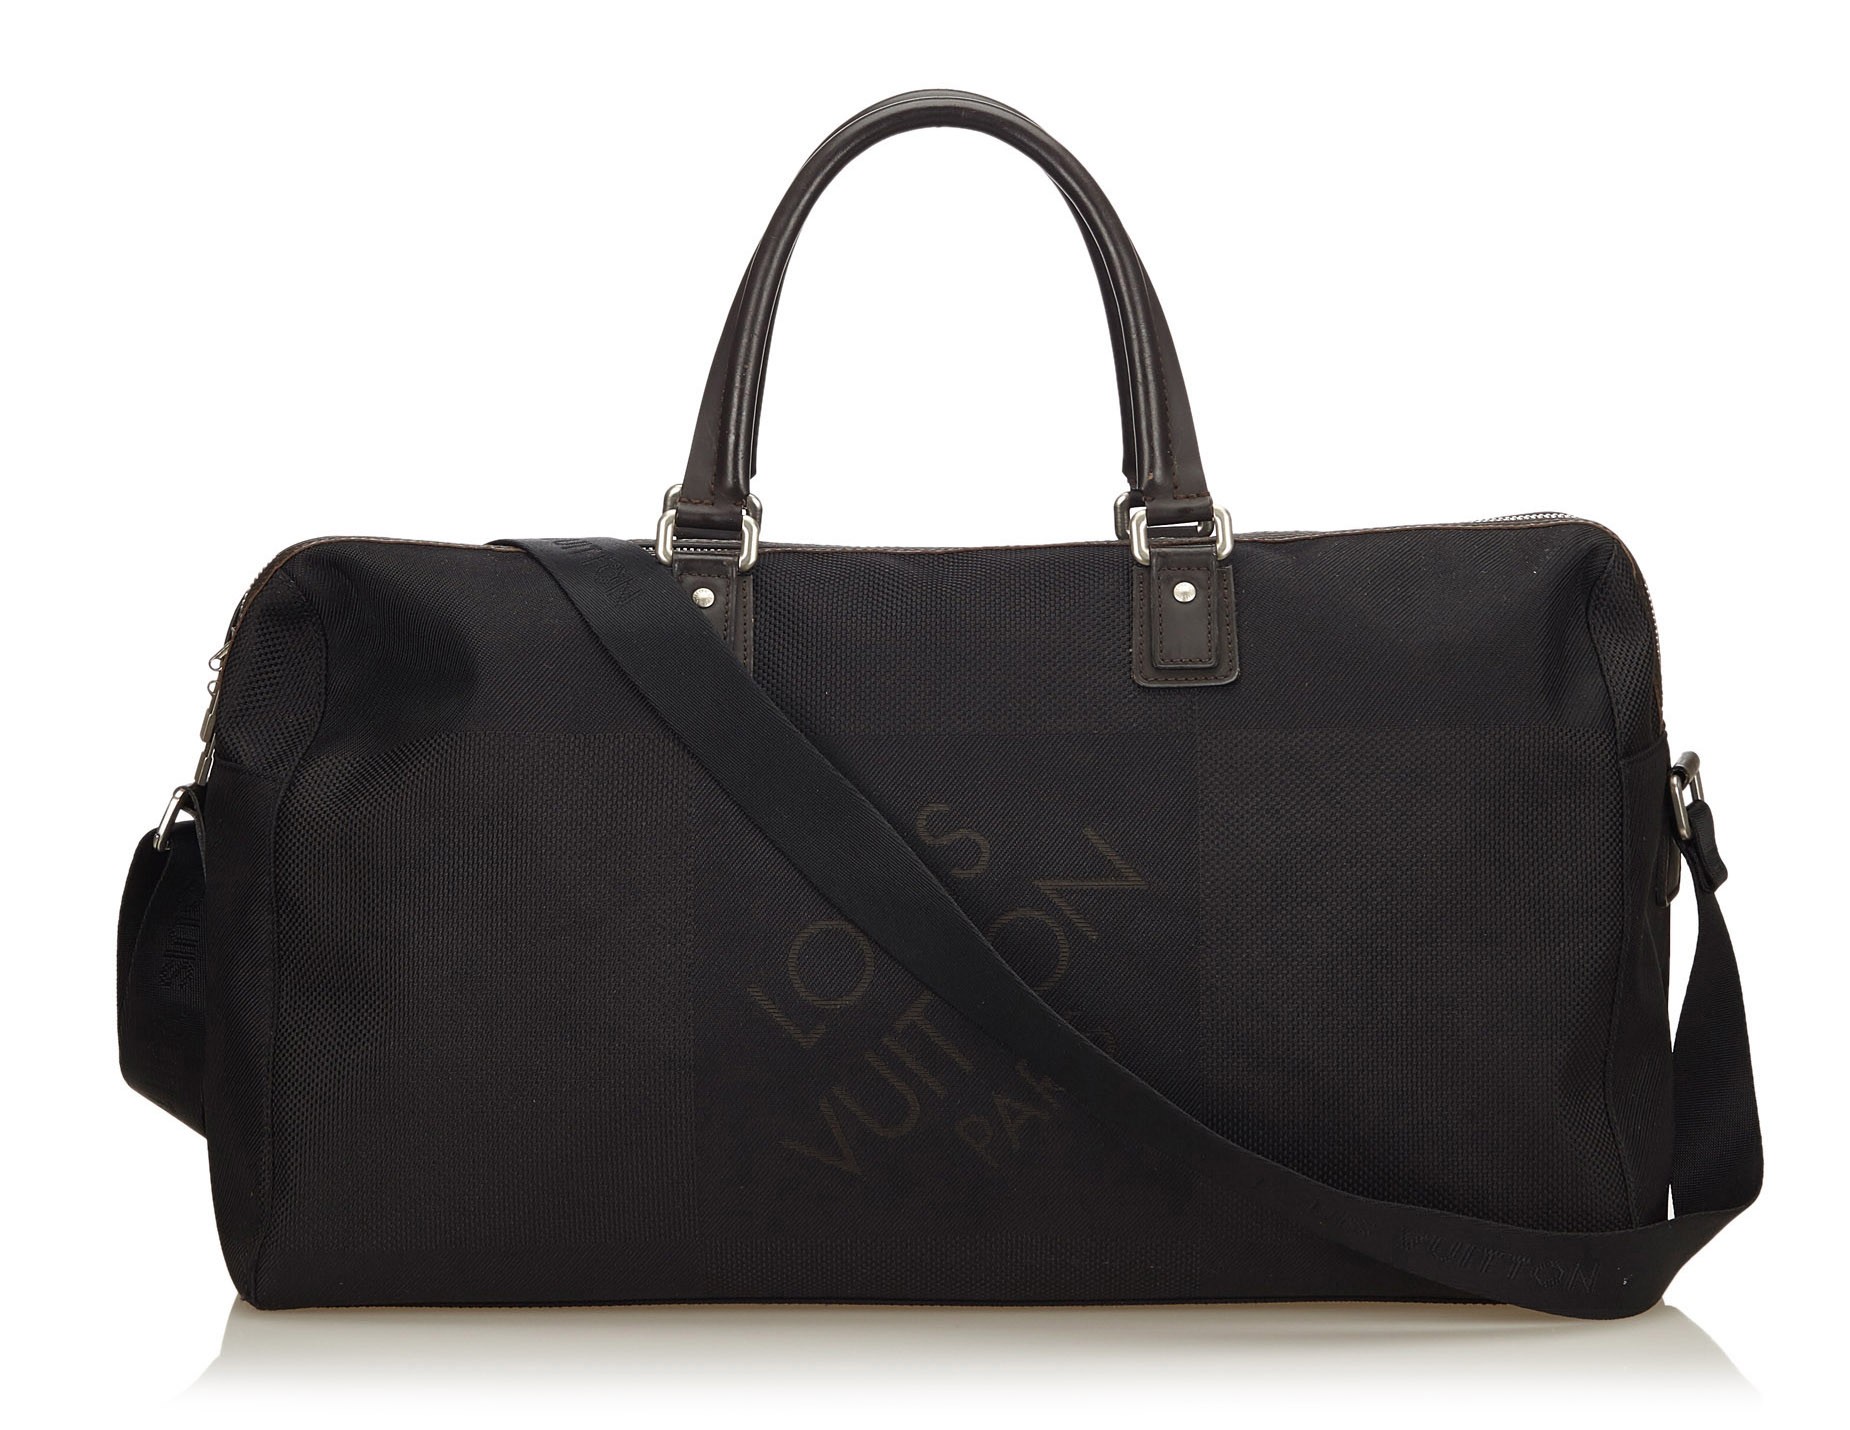 Louis Vuitton Damier Geant Nylon Backpack - Black Backpacks, Bags